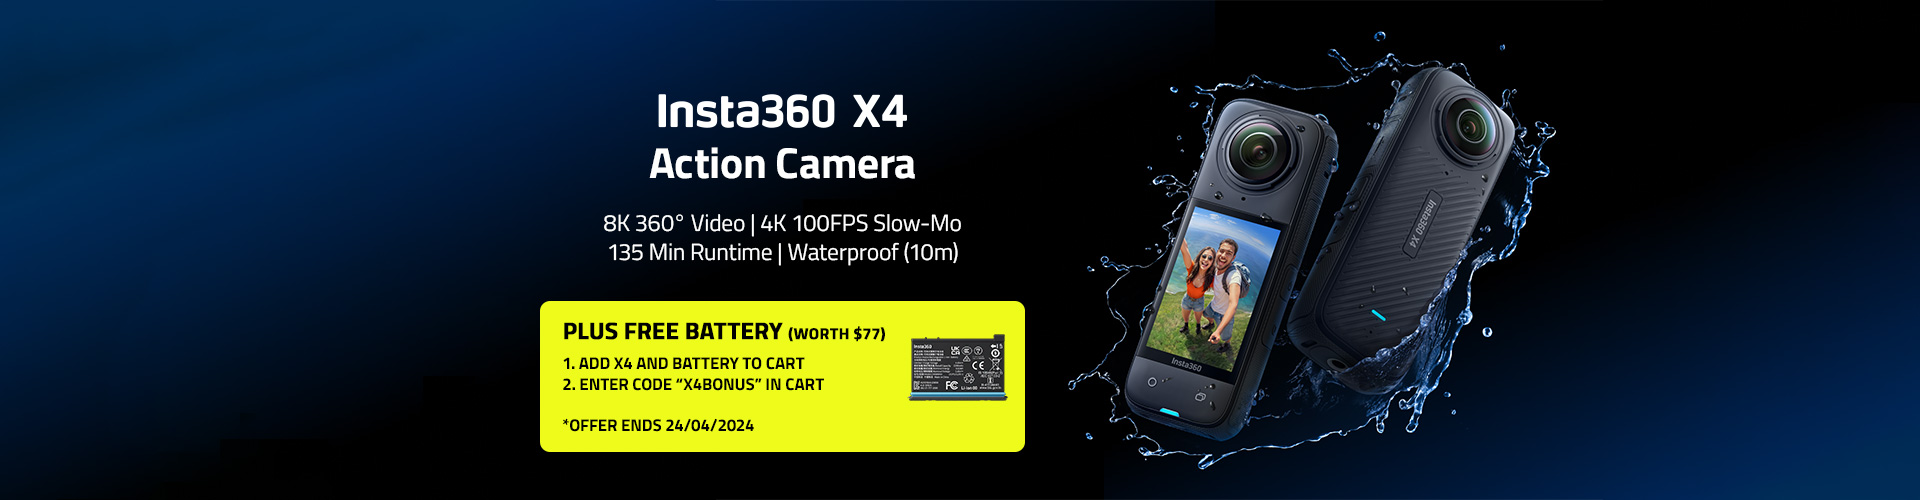 Insta360 X4 Launch Promotion